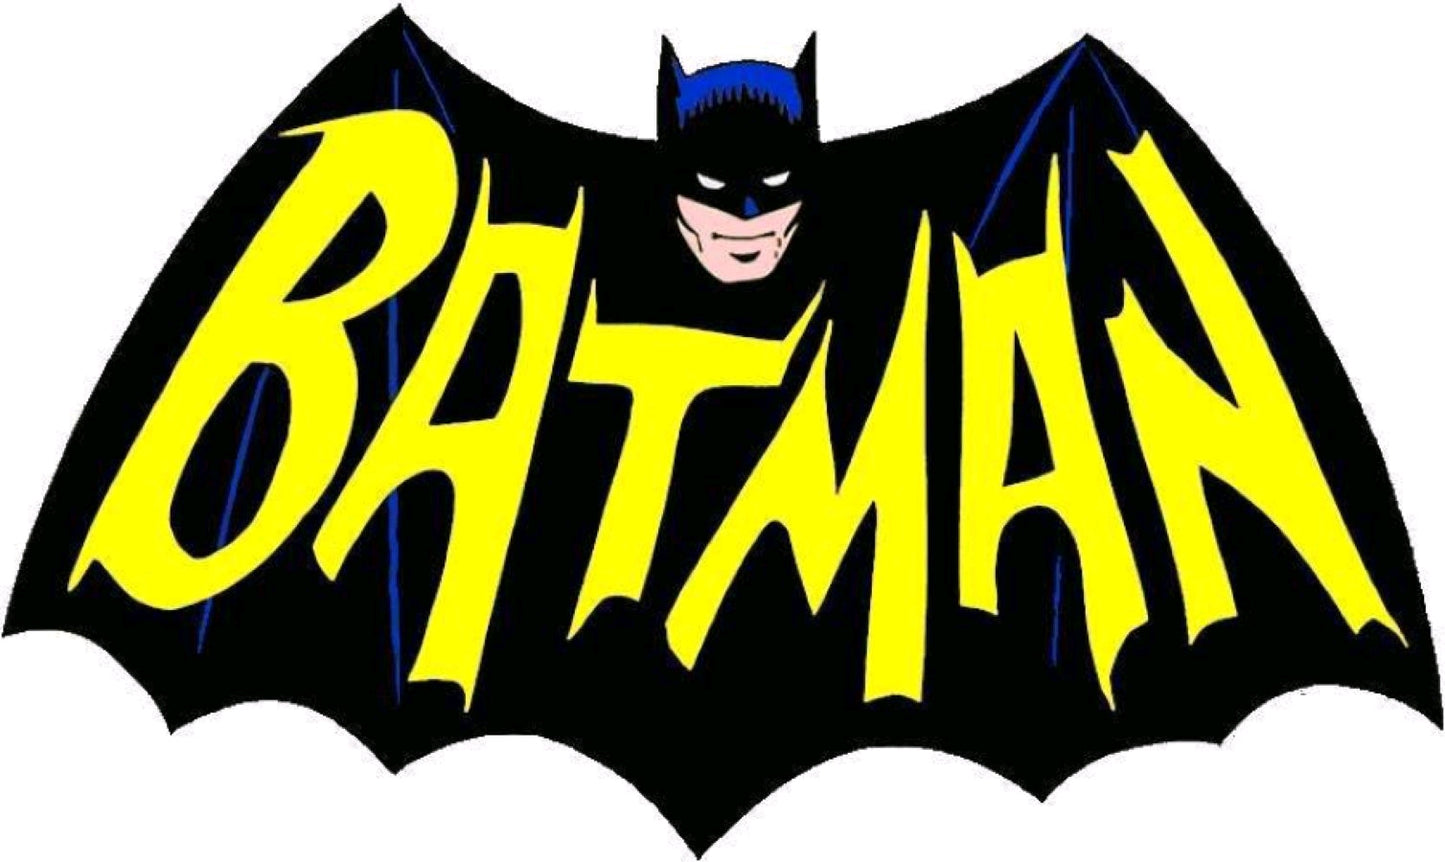 Batman (1966) - Batmobile with Batman 1:24 Scale Diecast Model Kit